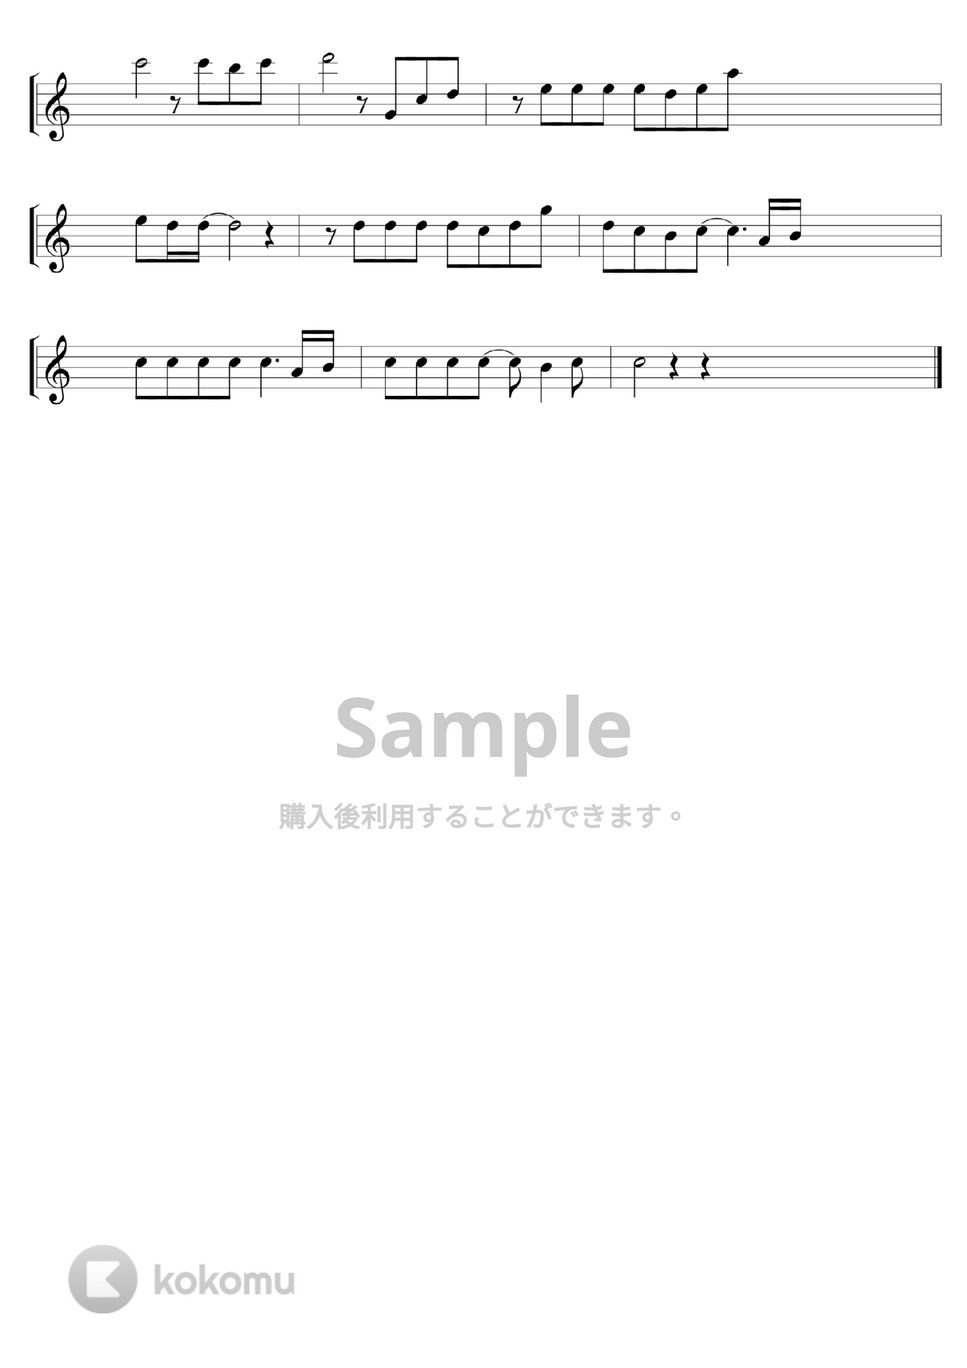 Hisaishi Joe - One Summer's Day by S.H Violin